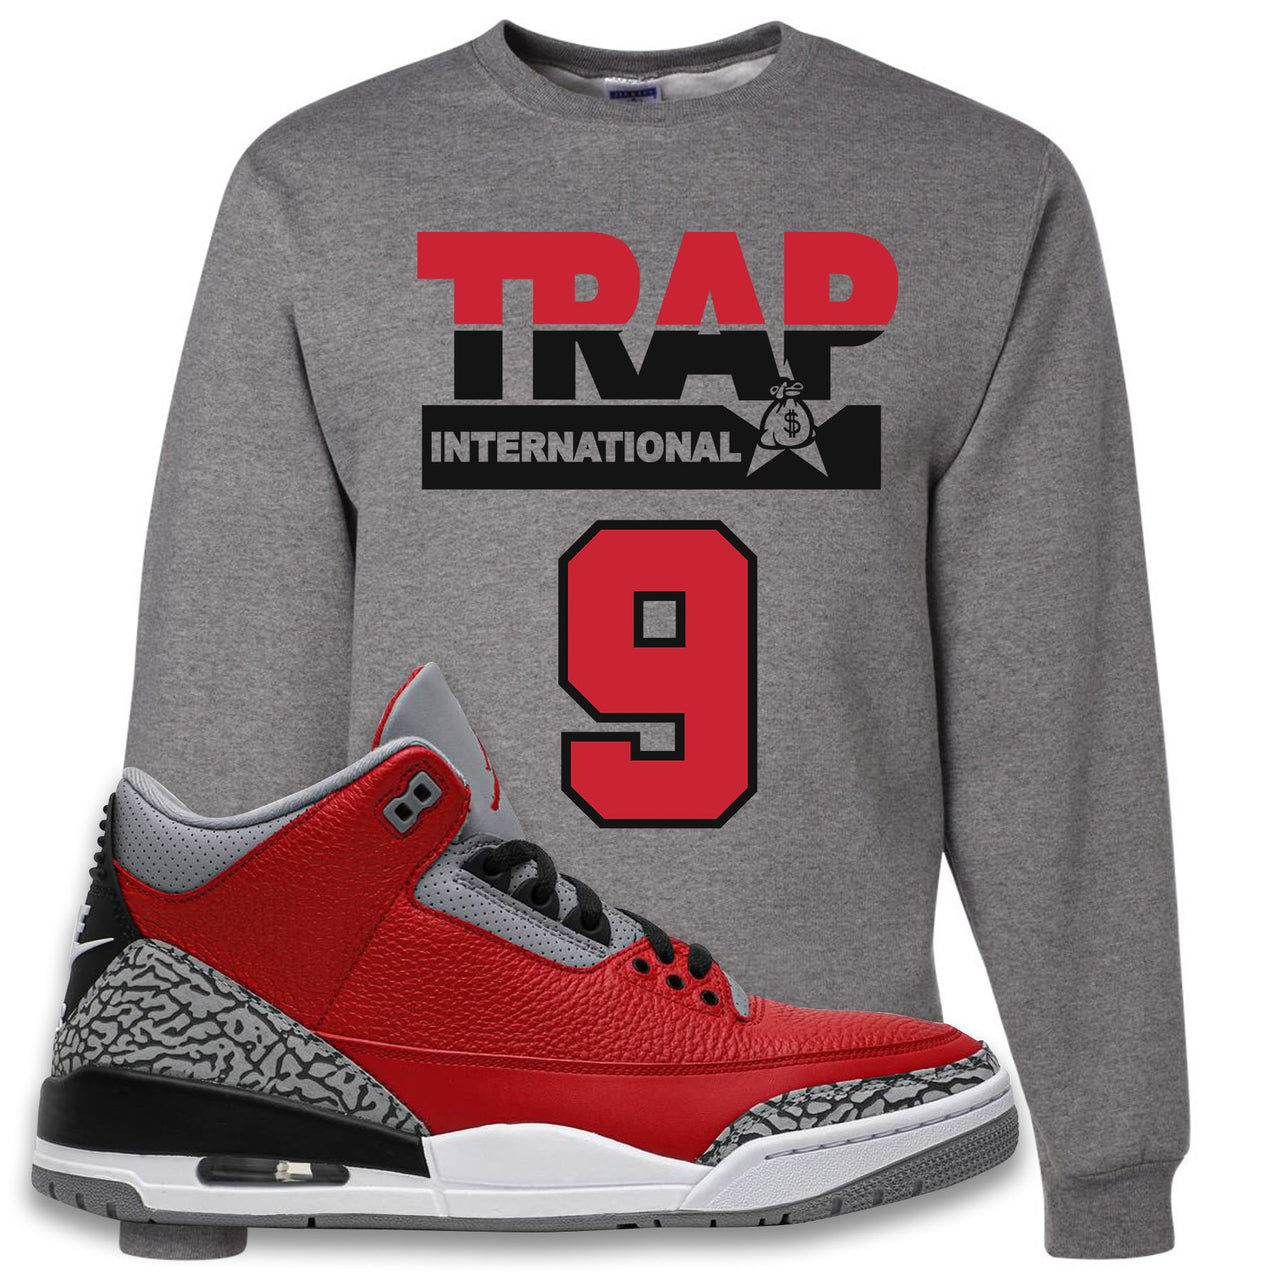 Chicago Exclusive Jordan 3 Red Cement Sneaker Oxford Crewneck Sweatshirt | Crewneck to match Jordan 3 All Star Red Cement Shoes | Trap International